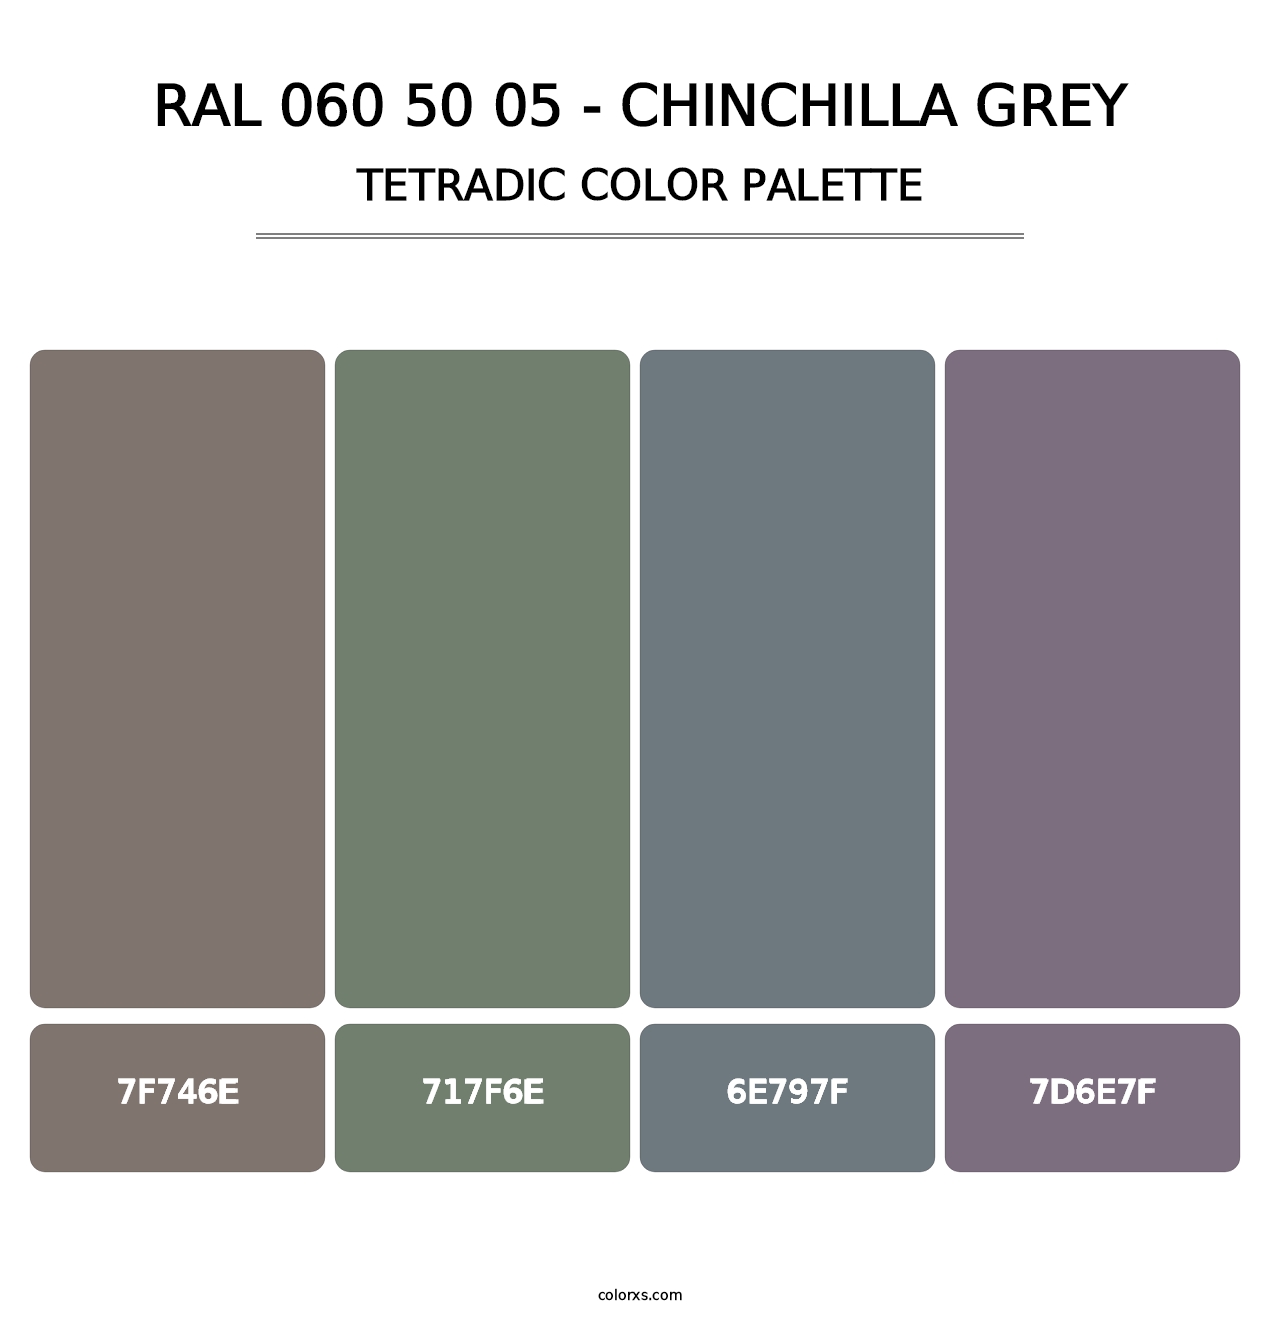 RAL 060 50 05 - Chinchilla Grey - Tetradic Color Palette